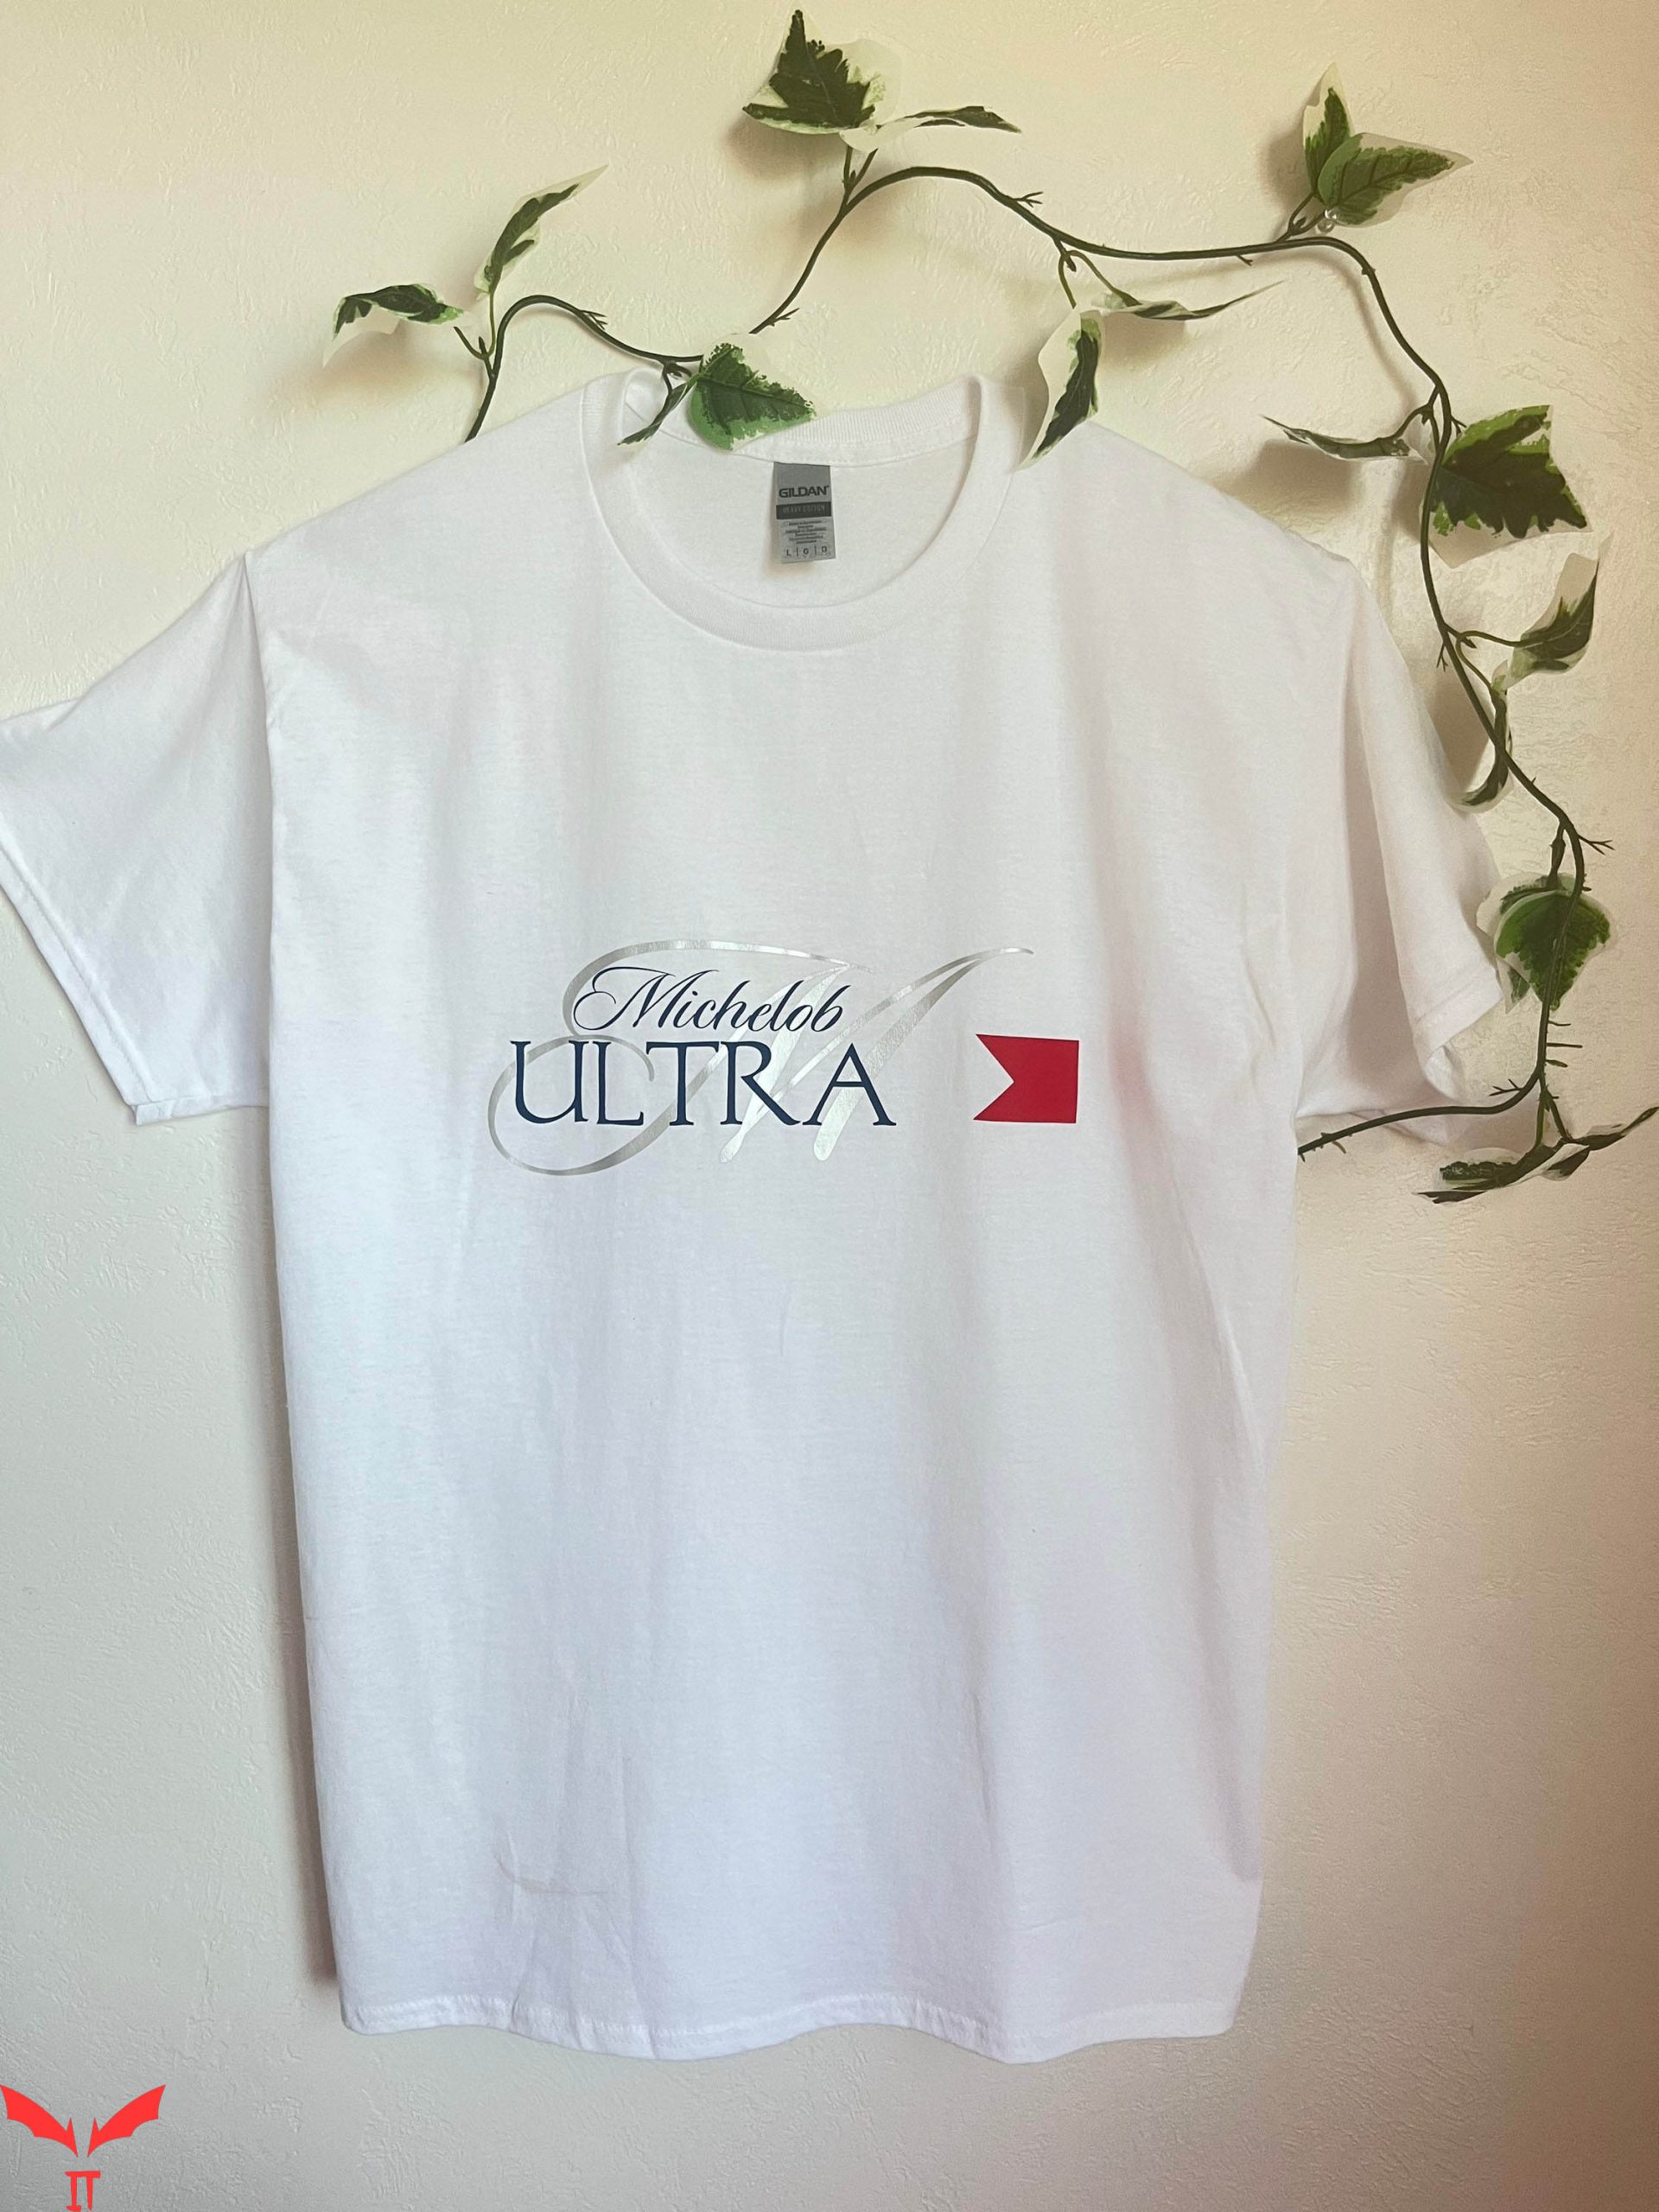 Michelob Ultra T-Shirt Michelob Ultra Trendy Beer Tee Shirt